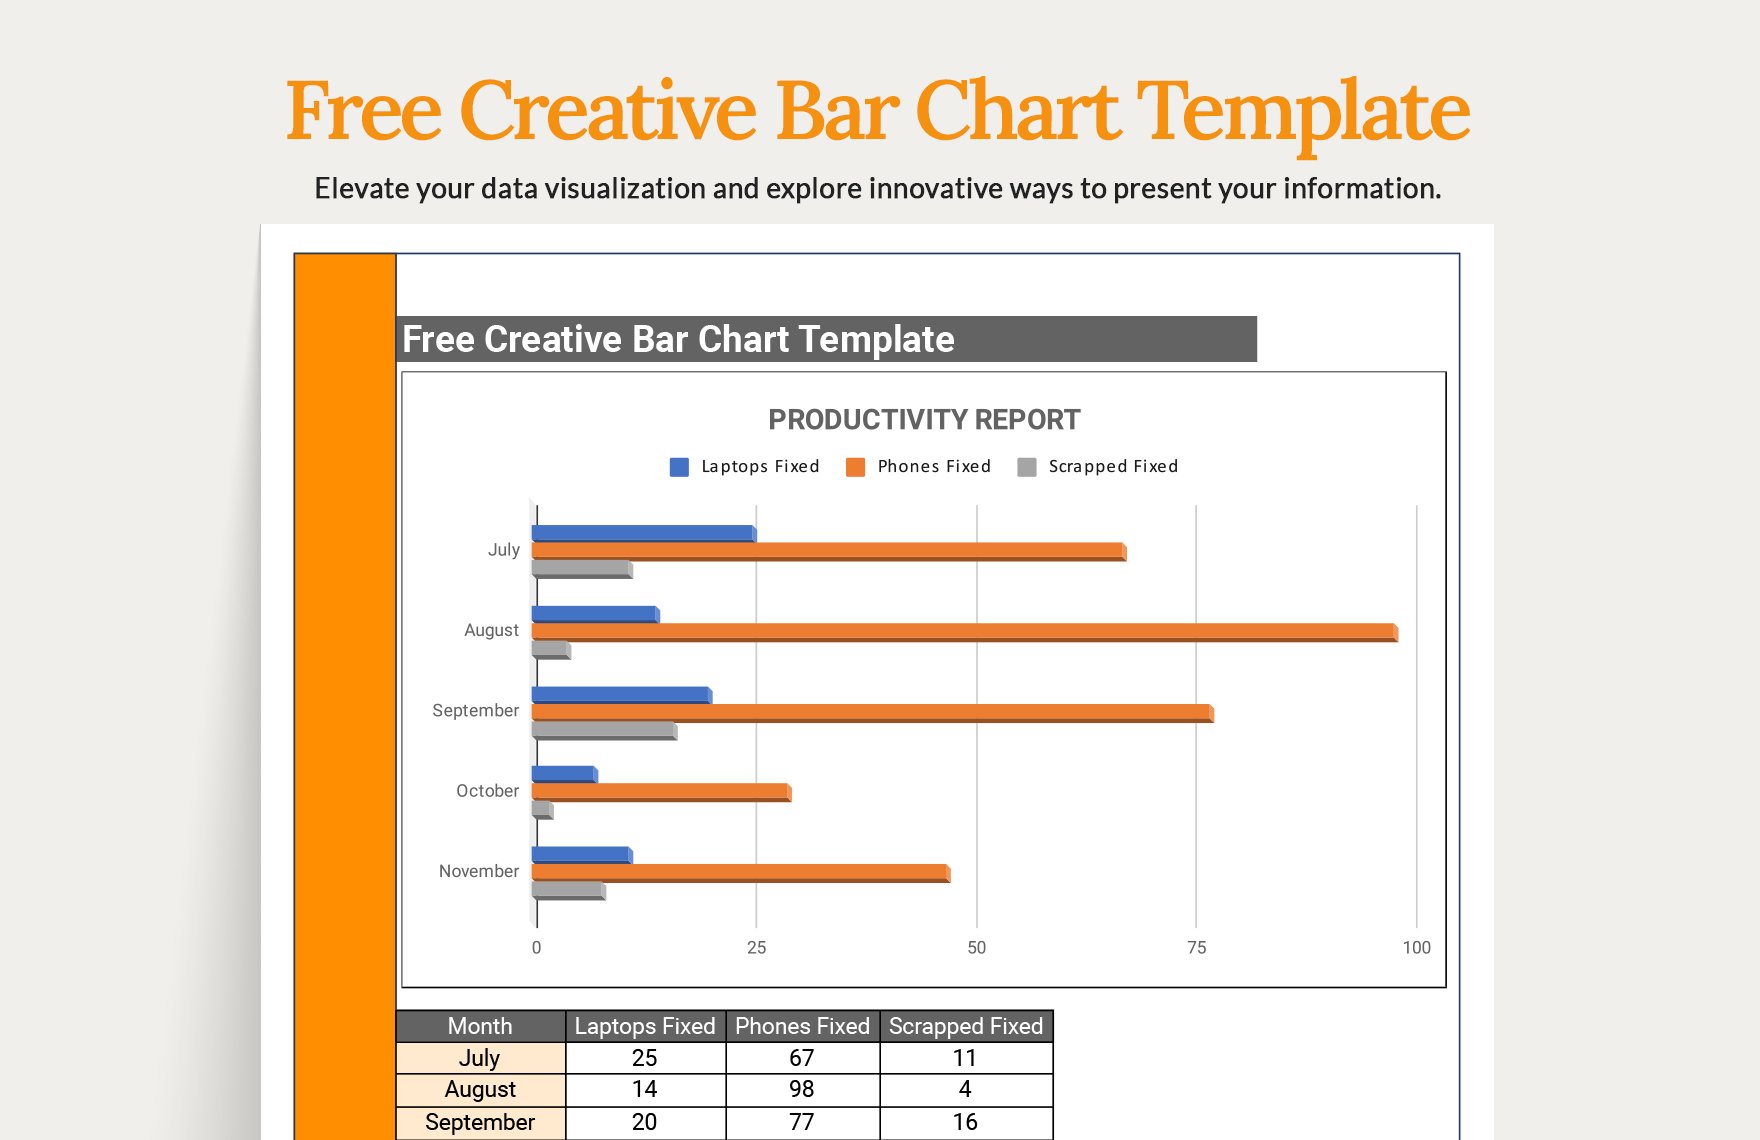 Free Creative Bar Chart Template